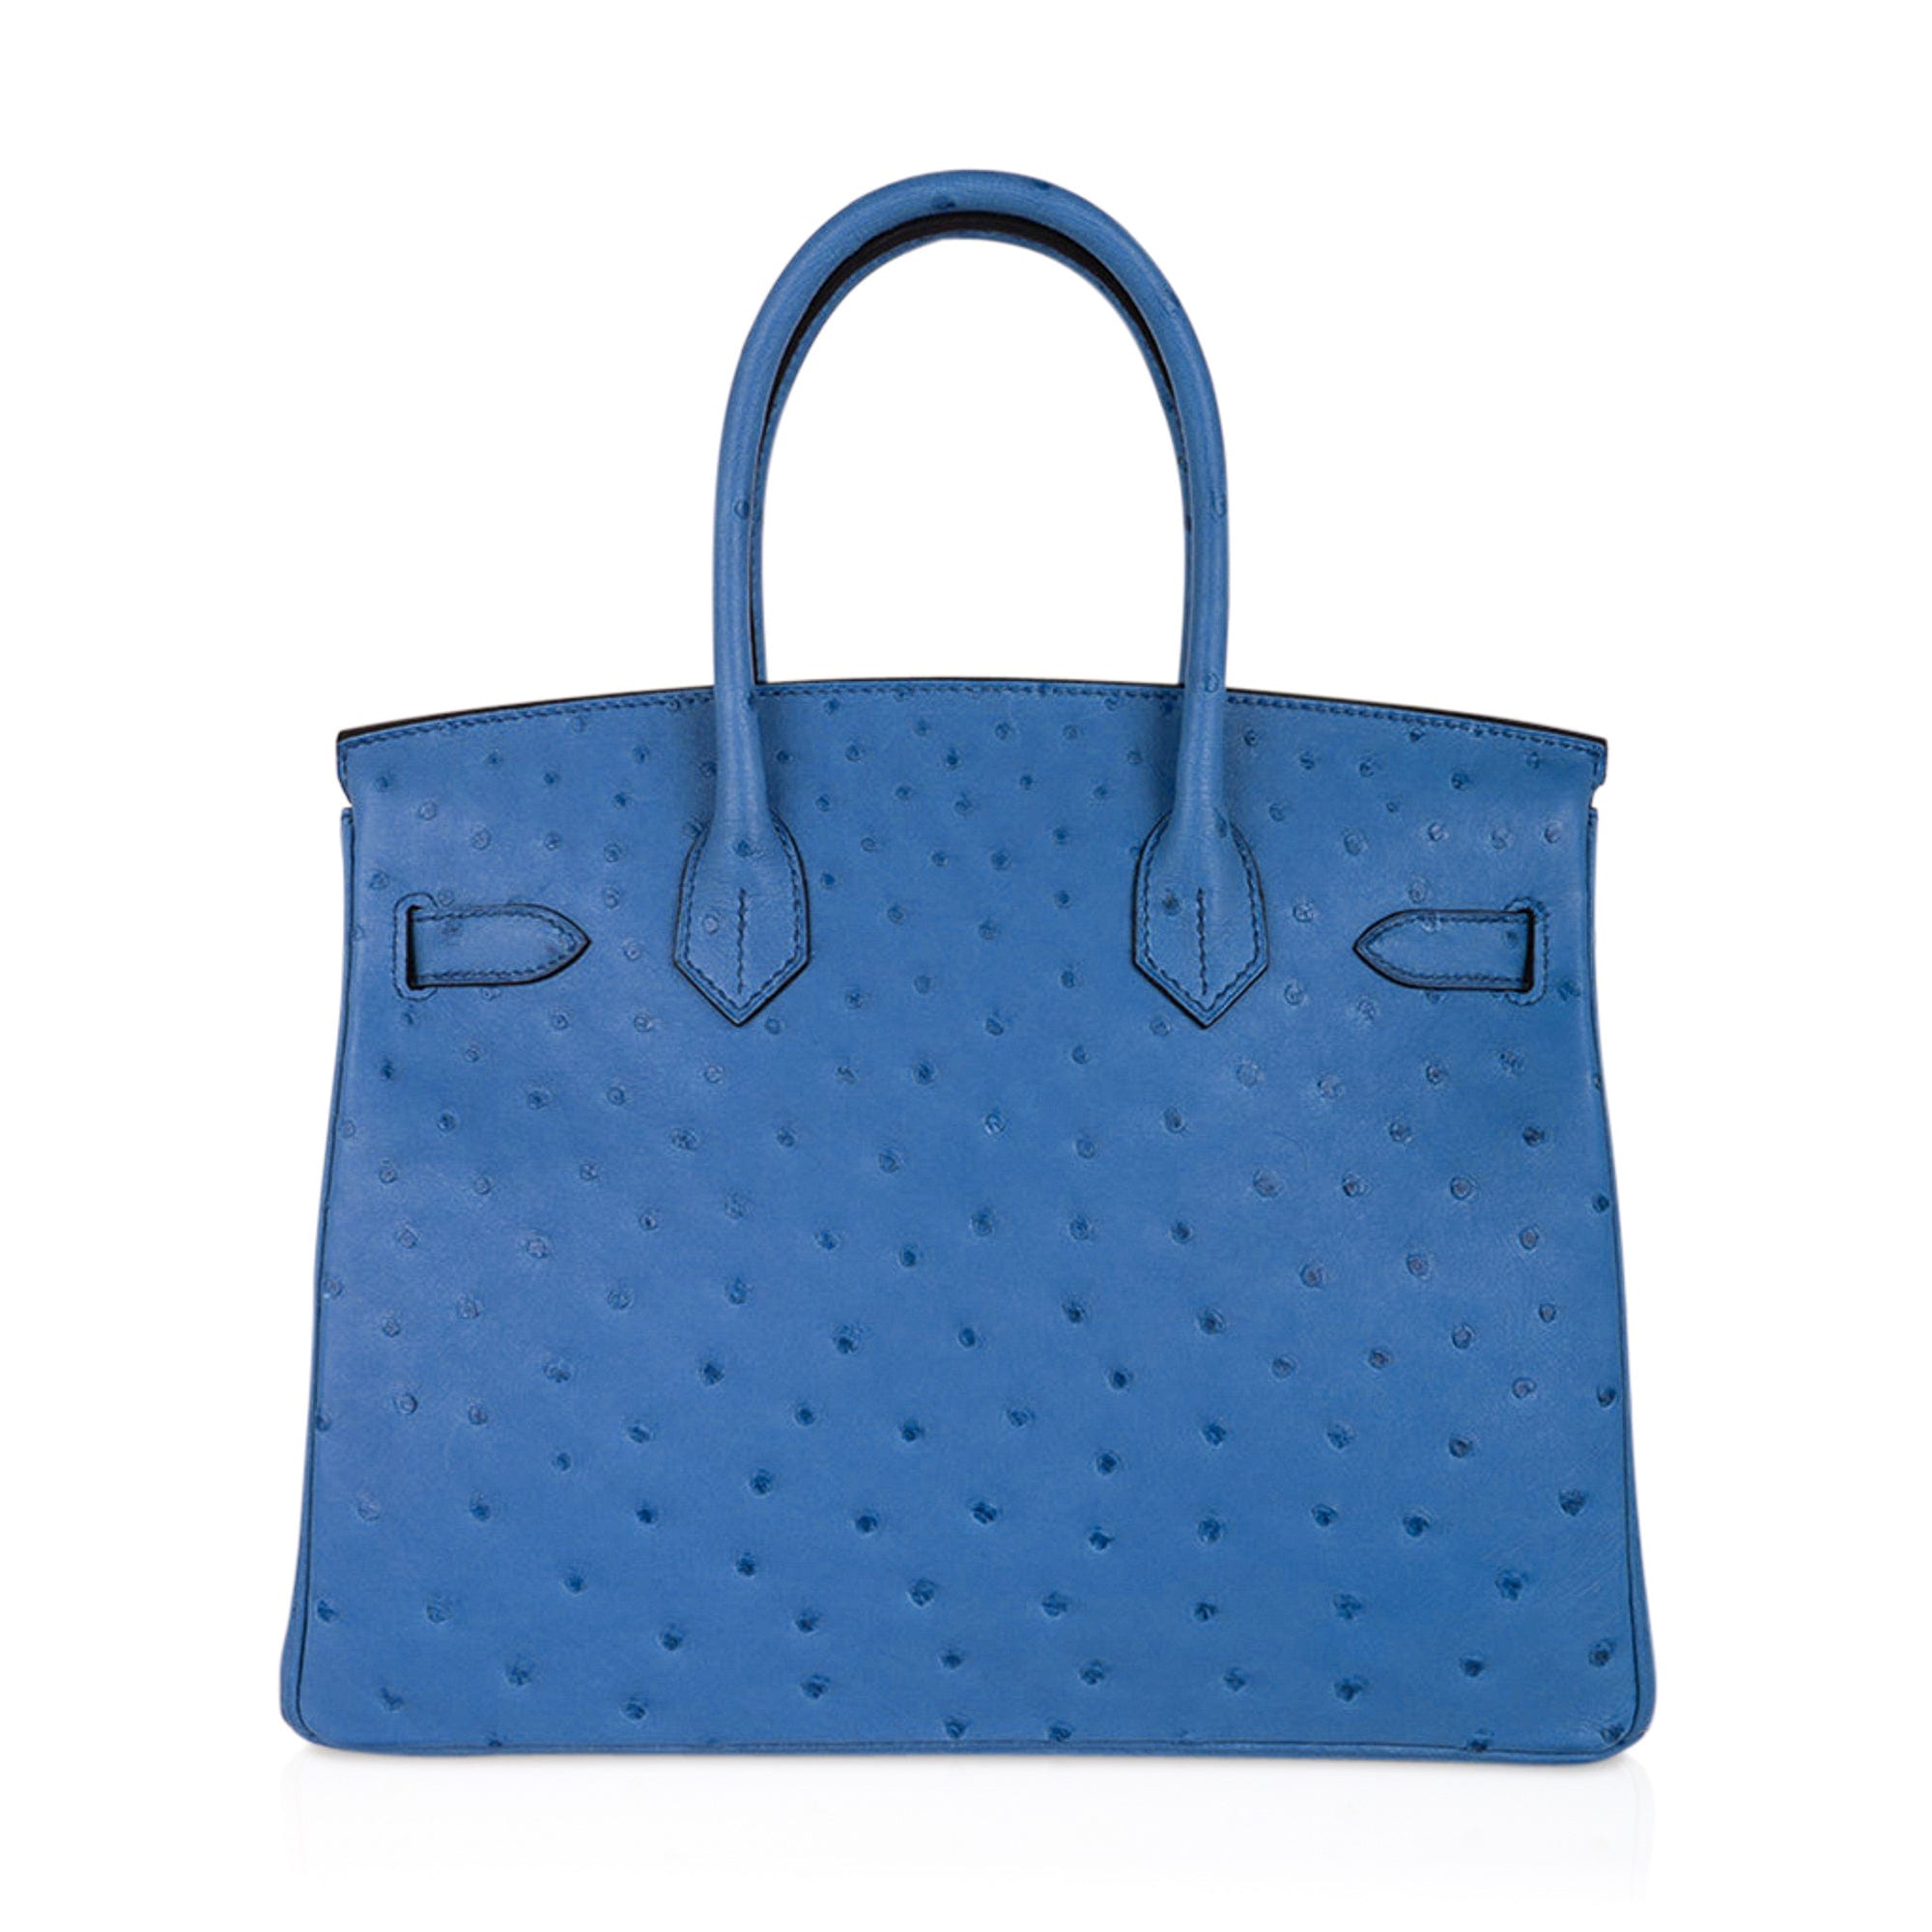 Hermès - Authenticated Birkin 30 Handbag - Ostrich Navy Plain for Women, Never Worn